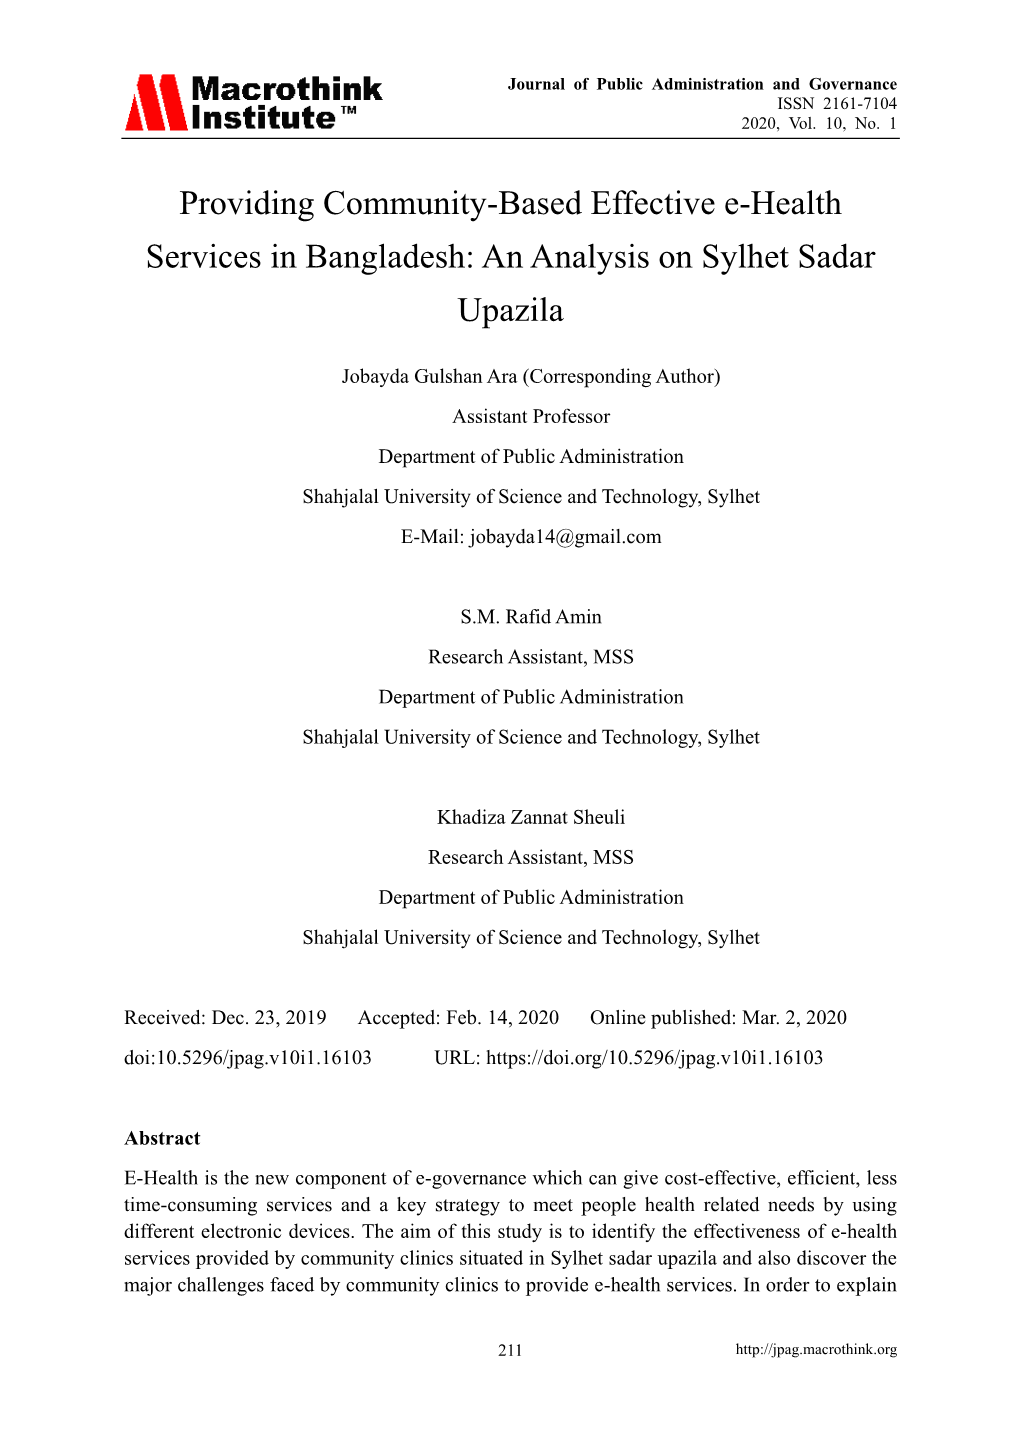 An Analysis on Sylhet Sadar Upazila